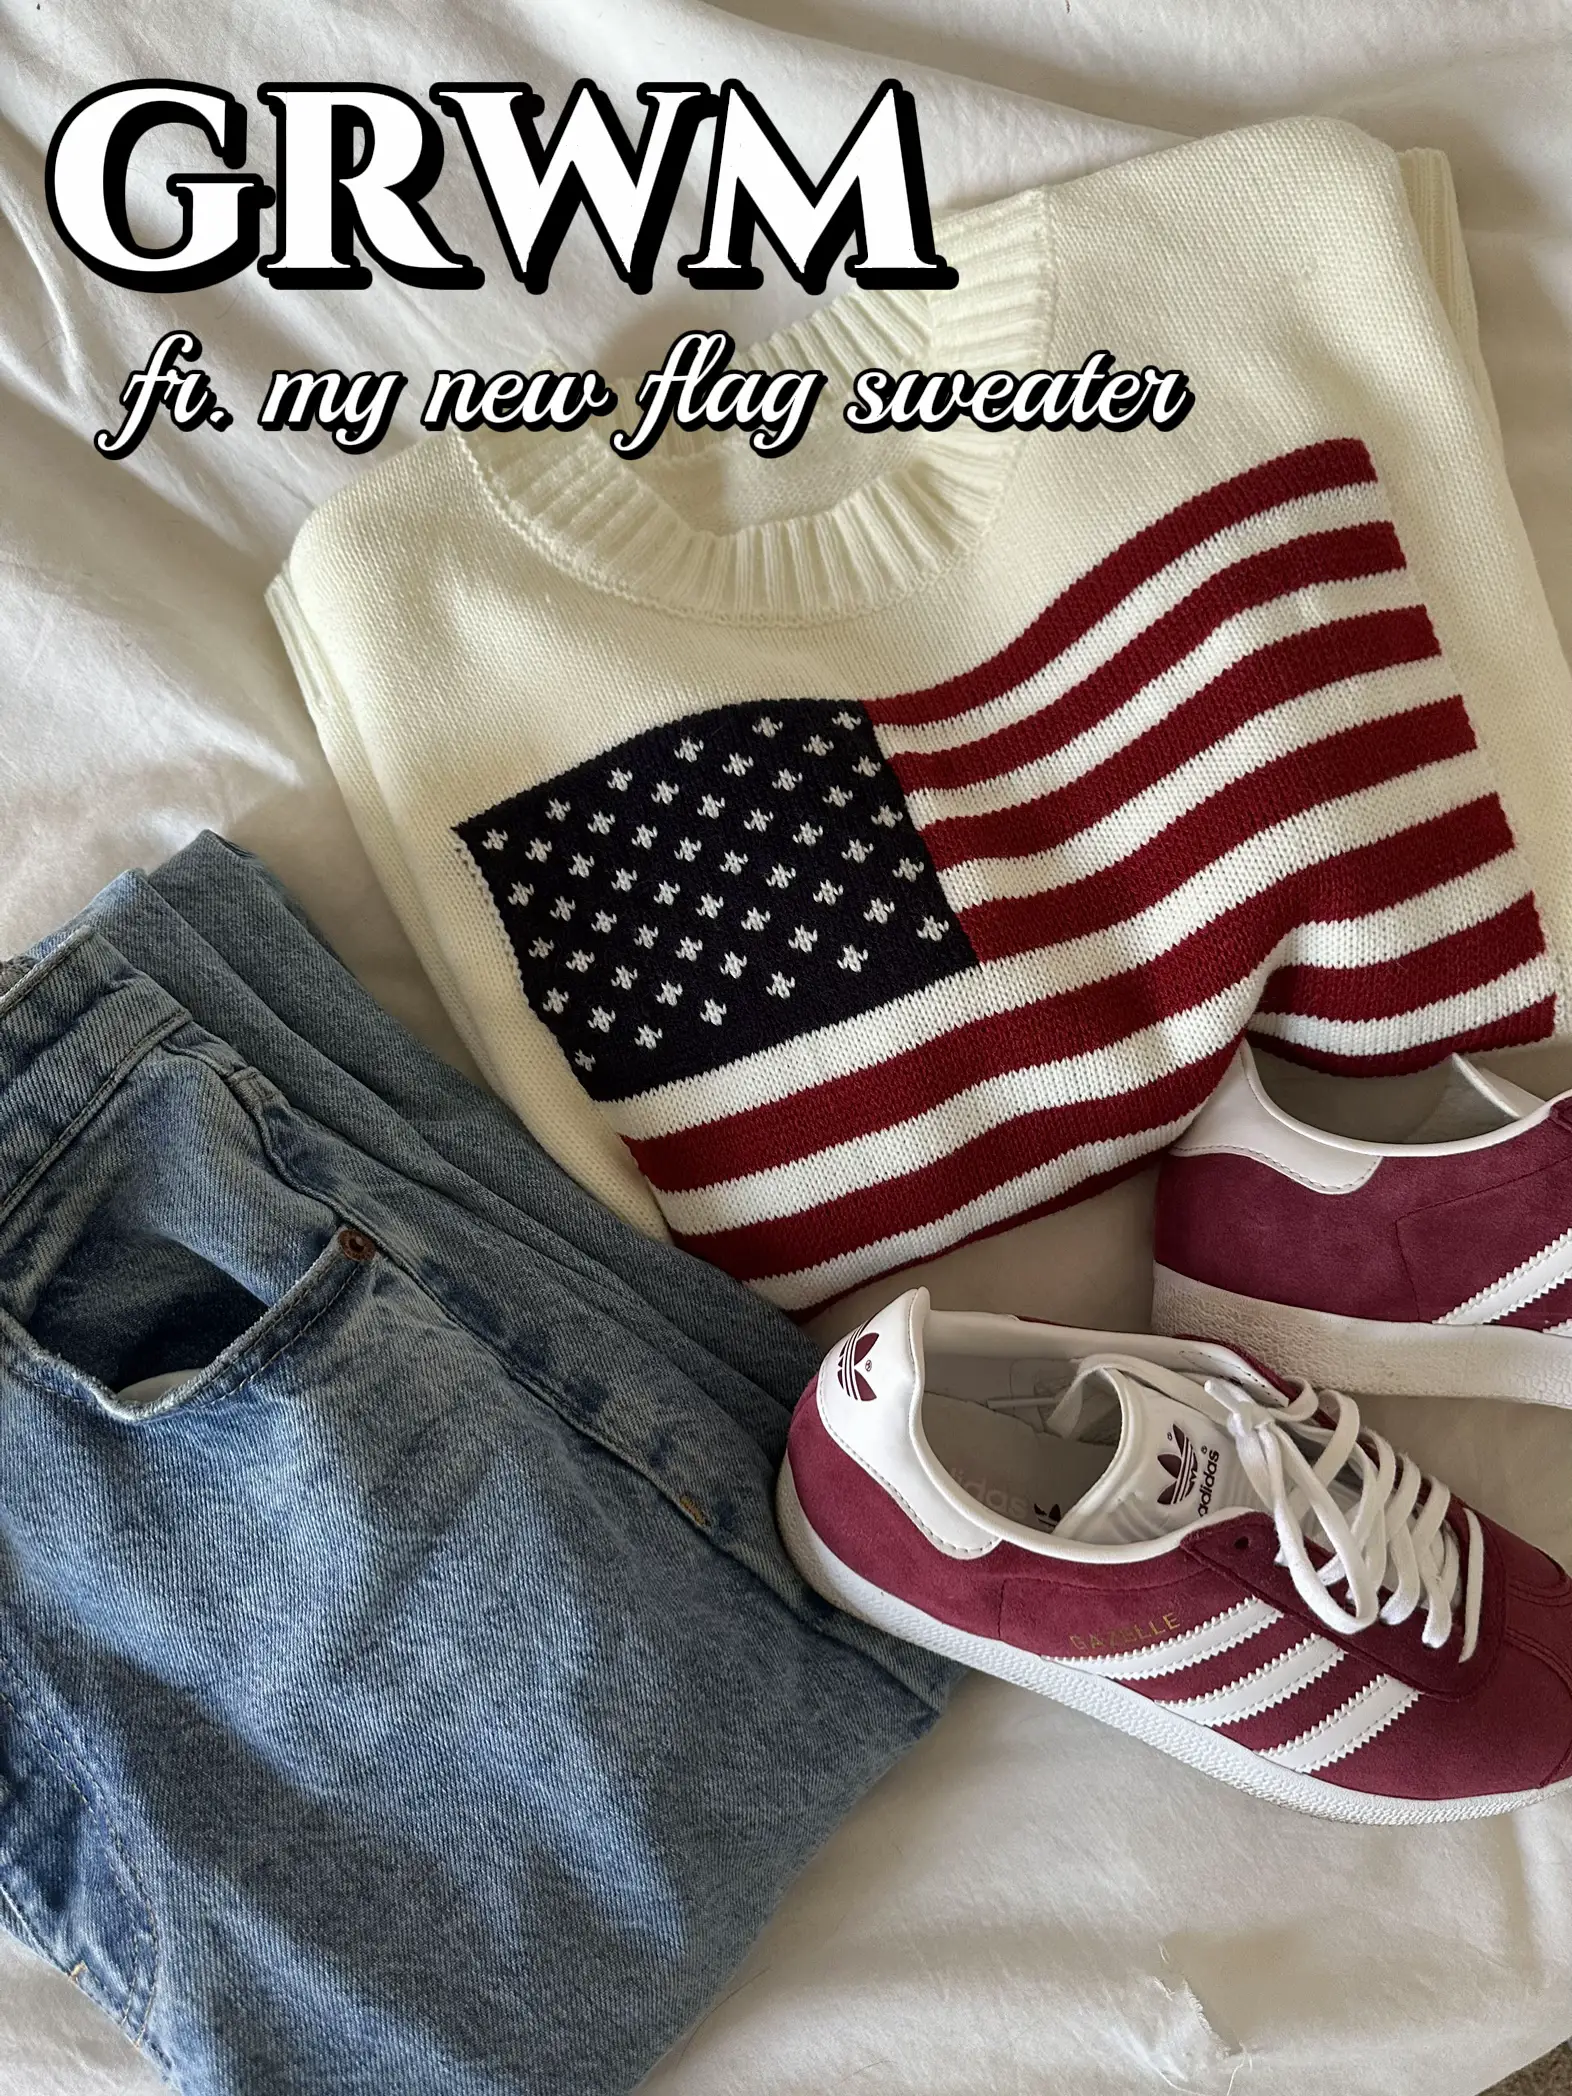 Nico American Flag Sweater – Brandy Melville